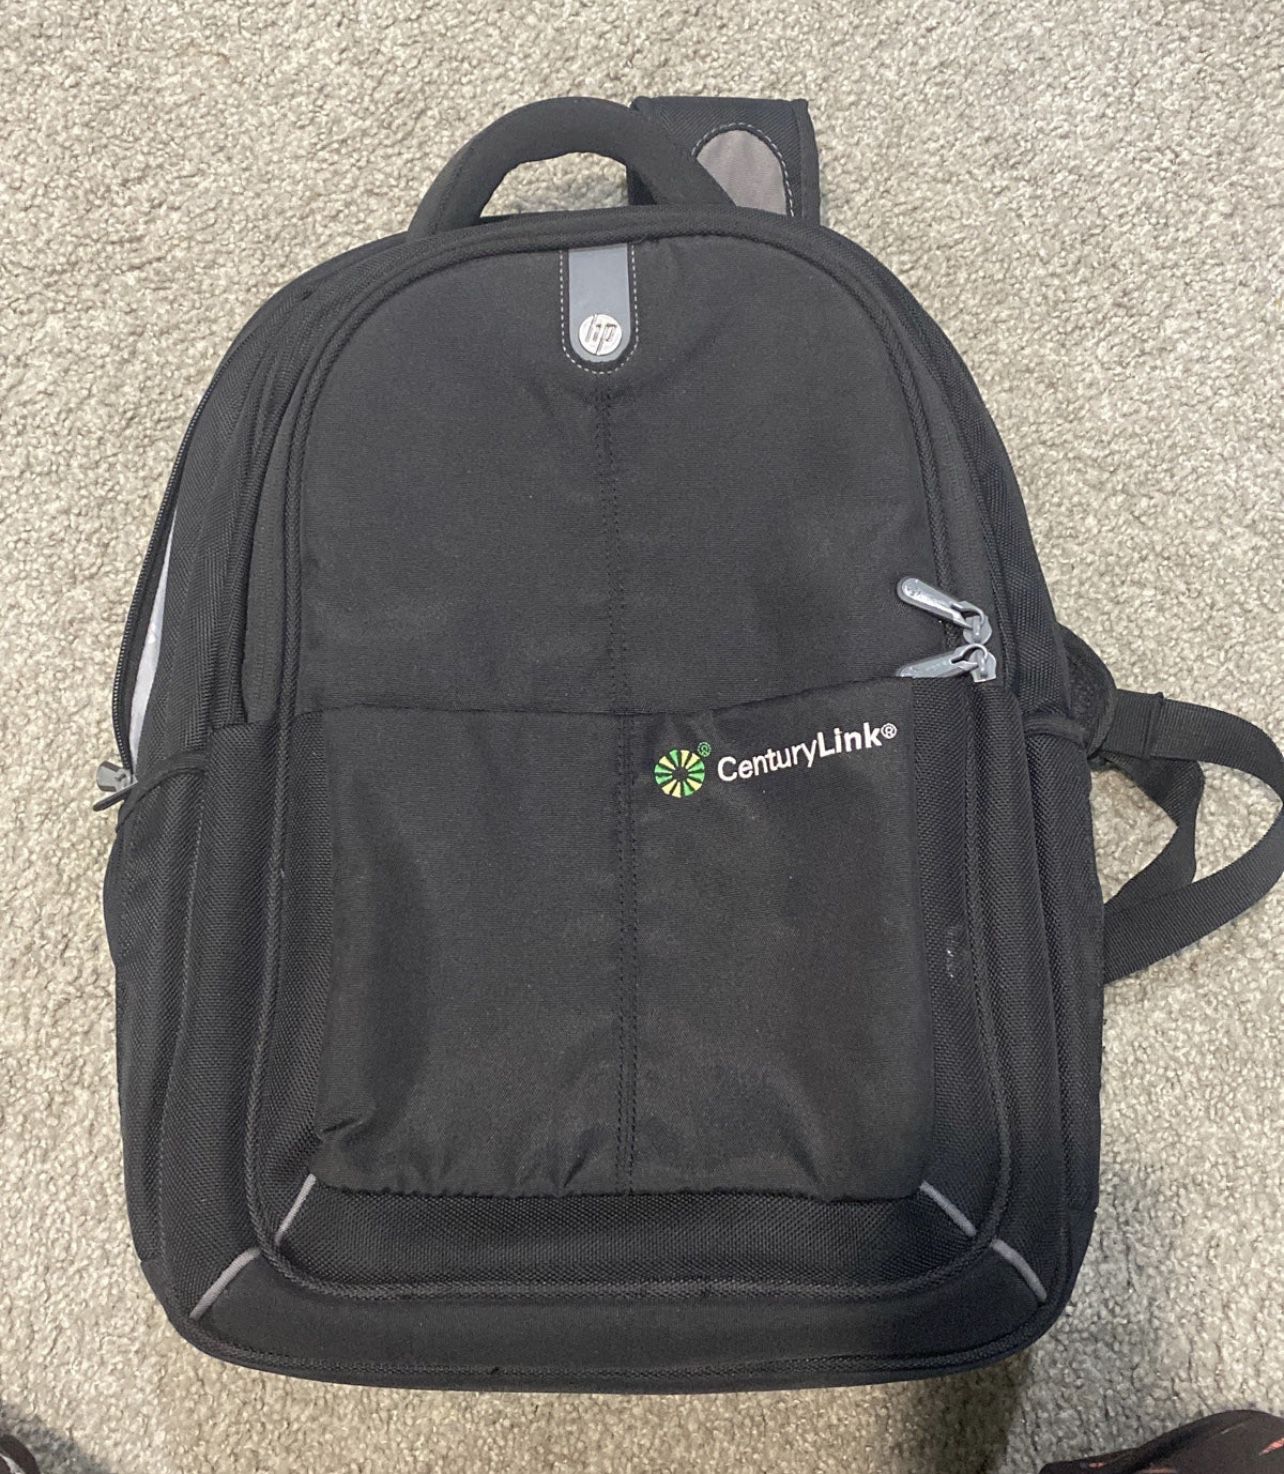 HP 17” laptop Backpack, travel backpack